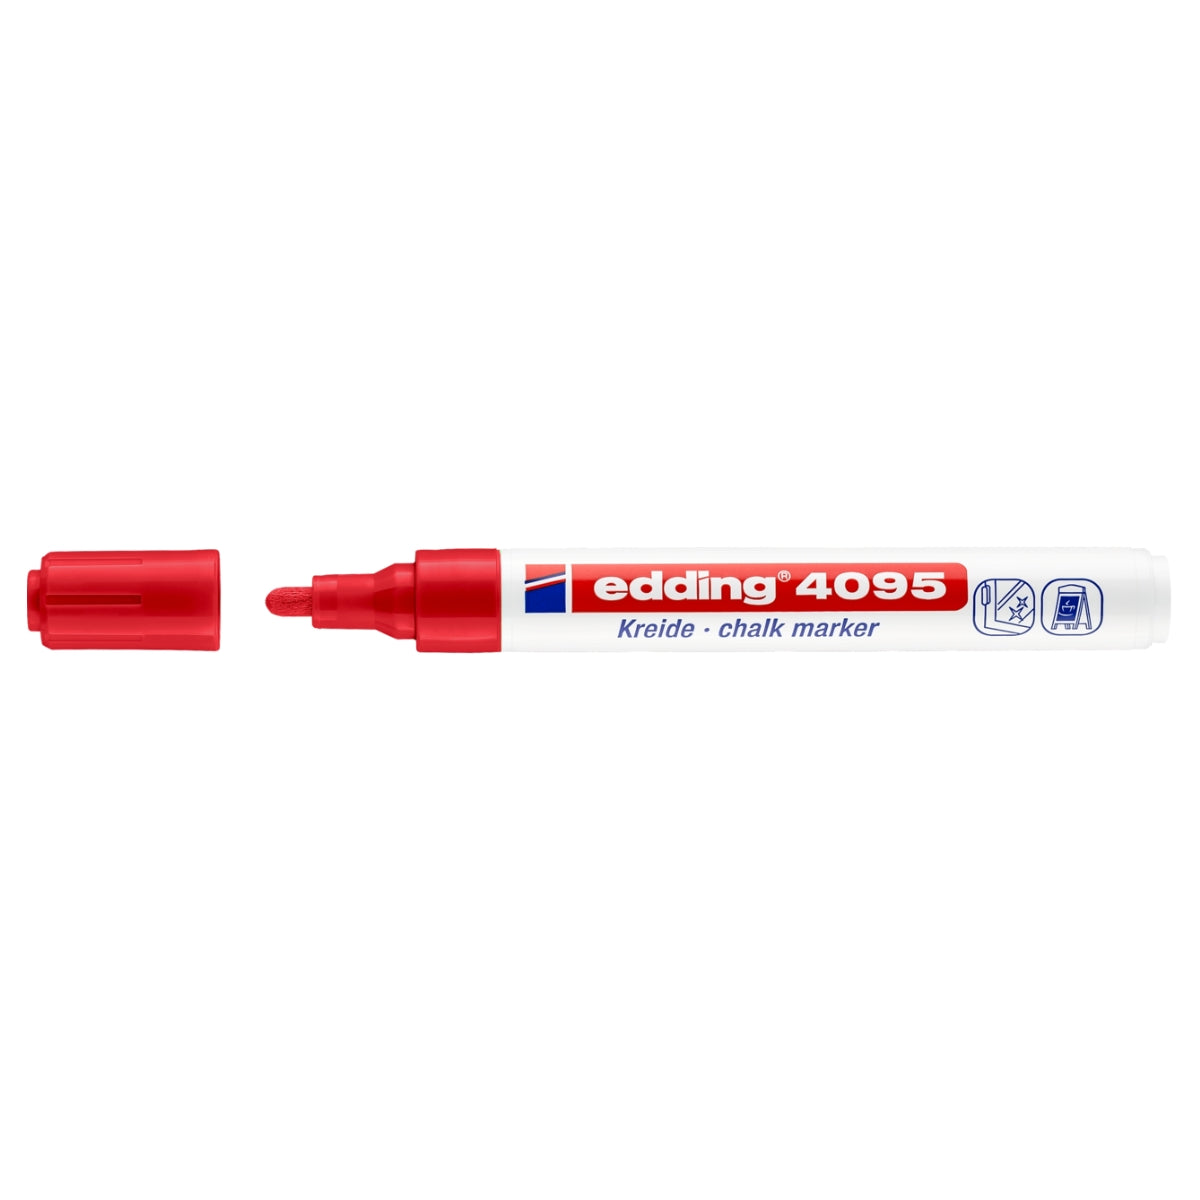 edding 4095 Chalk Marker, 2-3mm Bullet Tip, Red